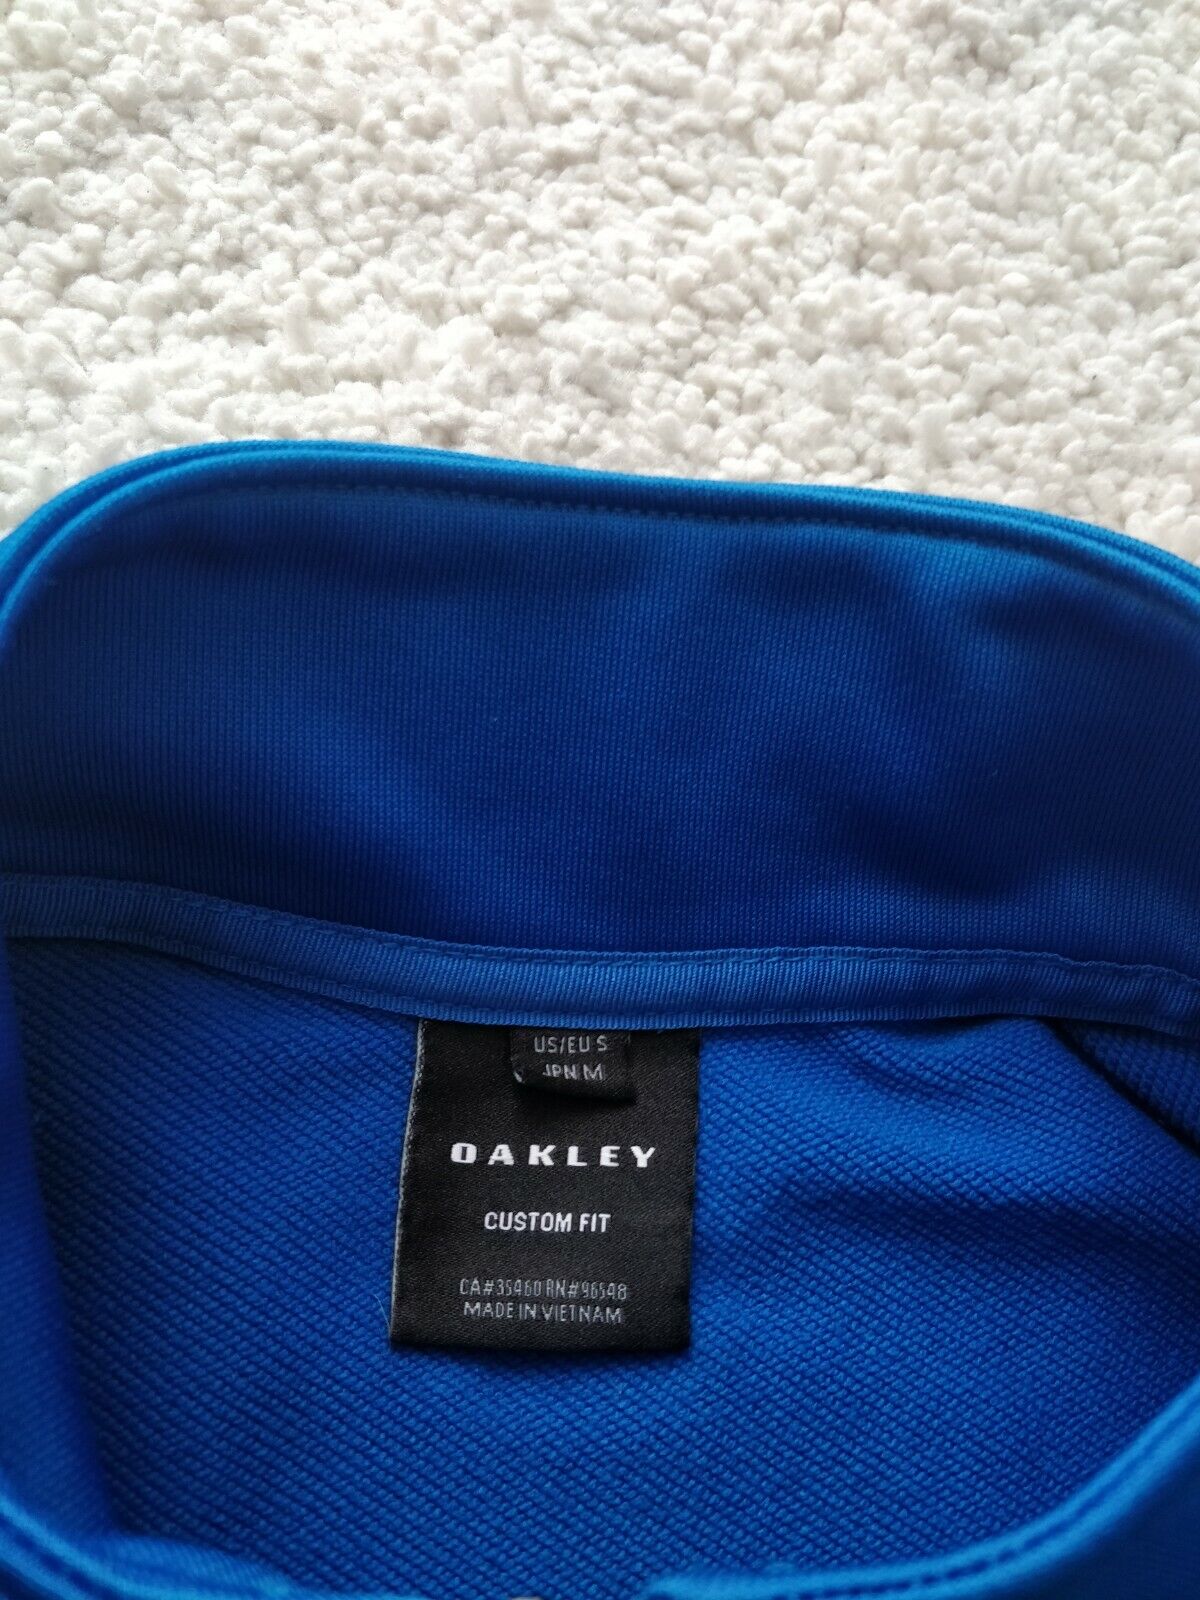 Oakley Mens Tracksuit Top Jacket Navy Blue Classic Hype Sweatshirt Training